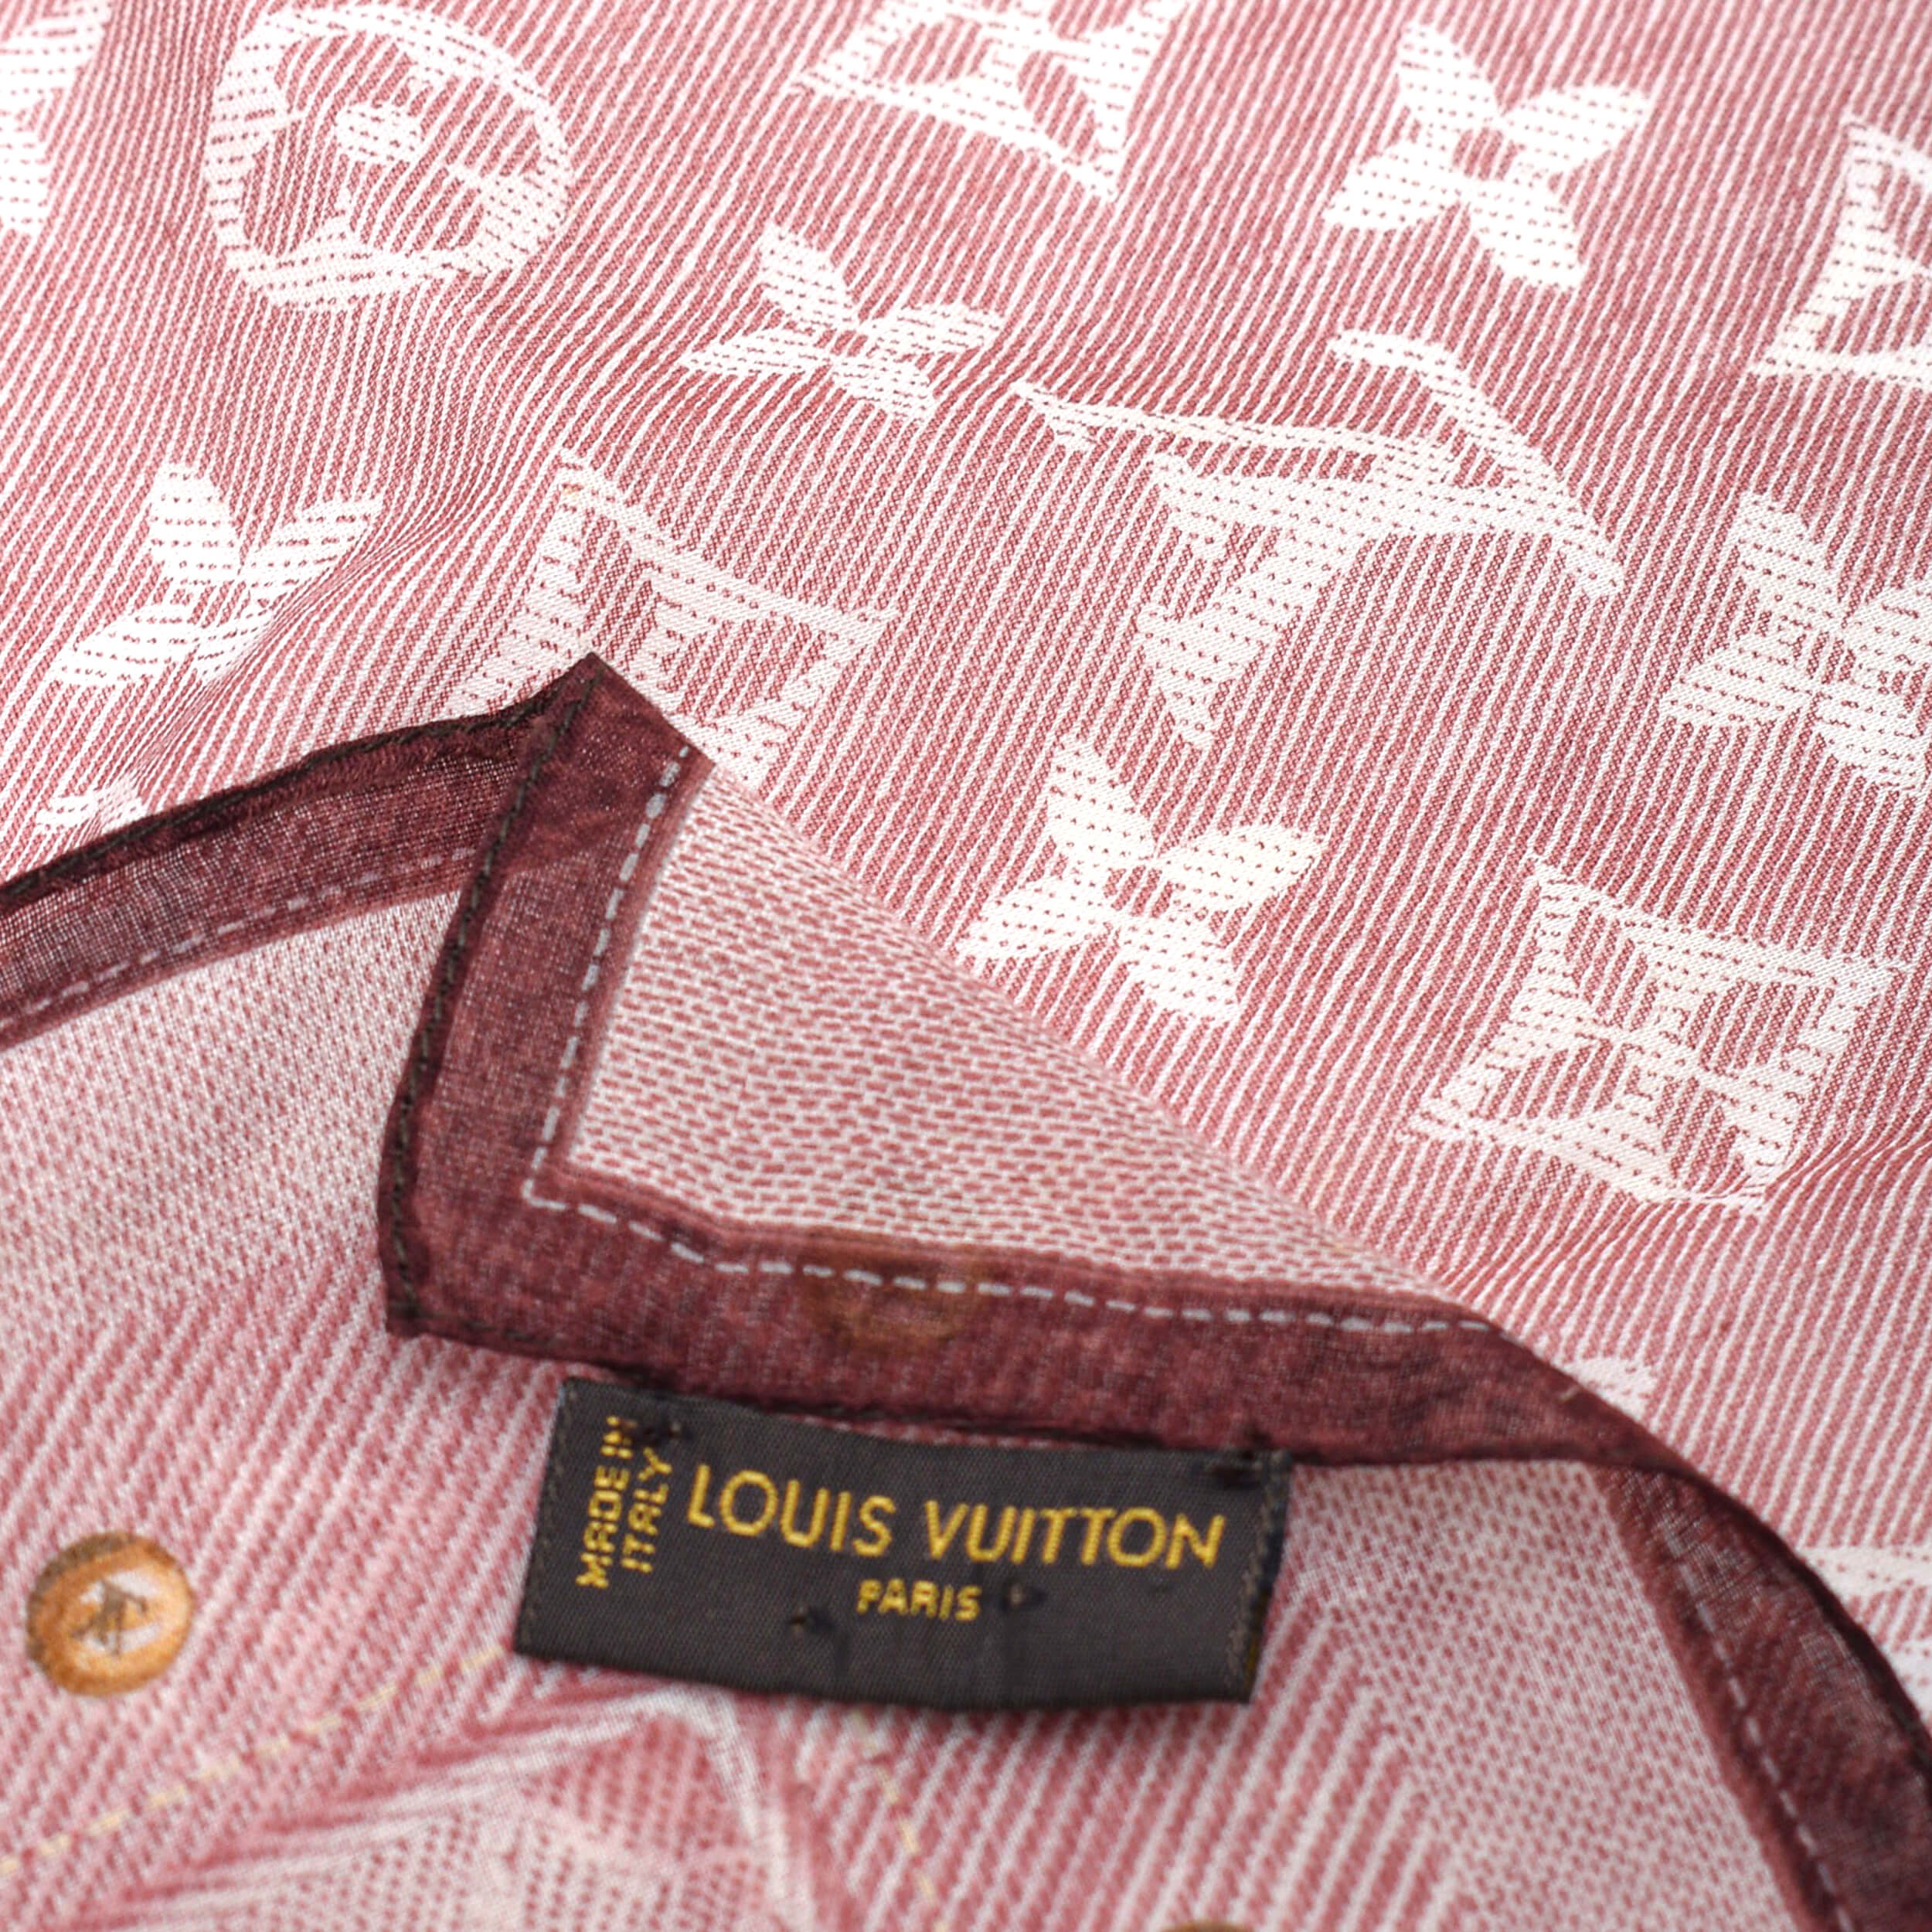 Louis Vuitton - Pink Monogram Cotton Scarf 55*55